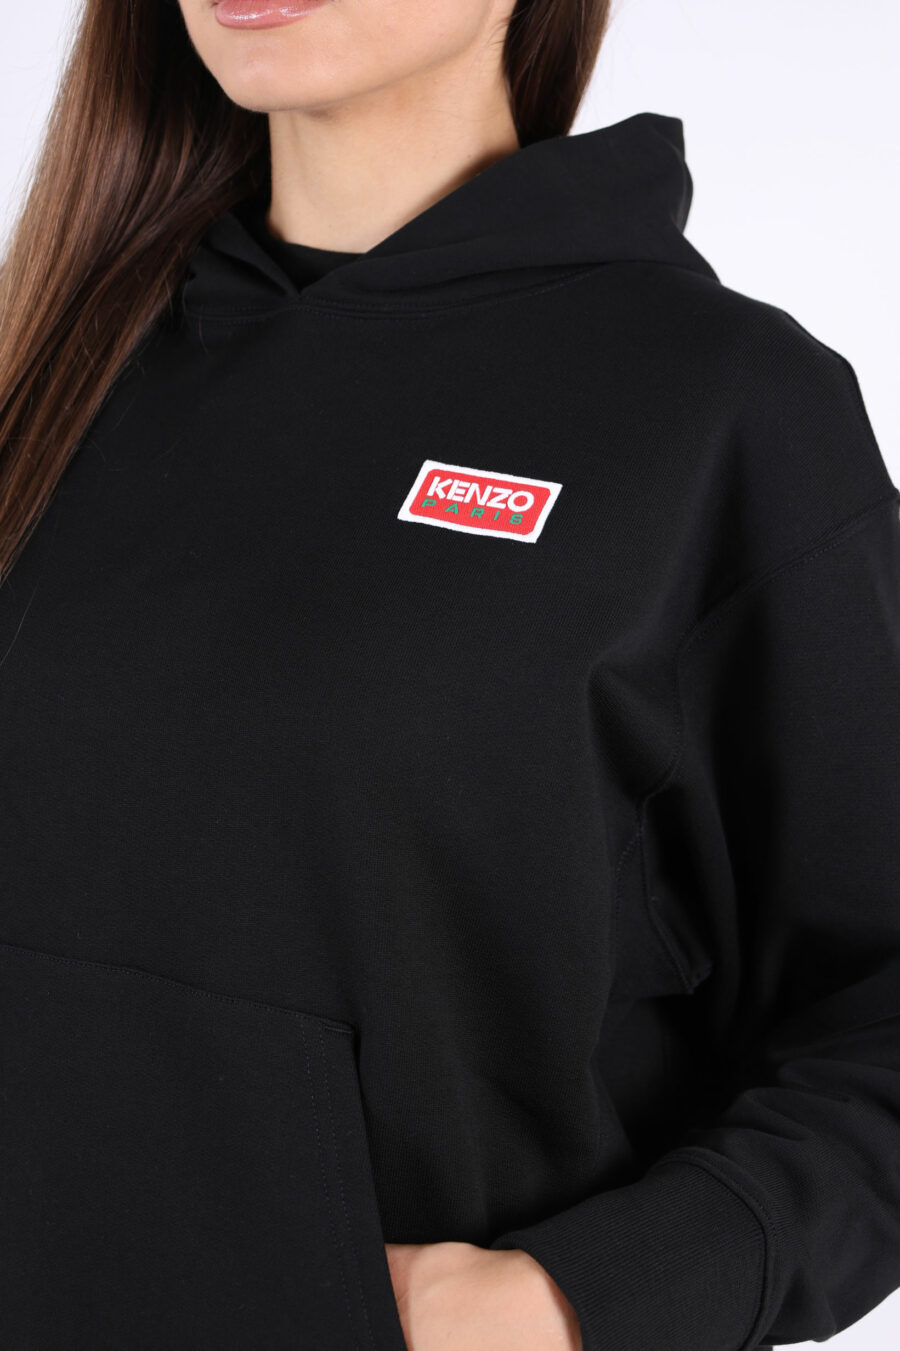 Oversize black hooded sweatshirt with "kenzo paris" logo - 361223051567301582